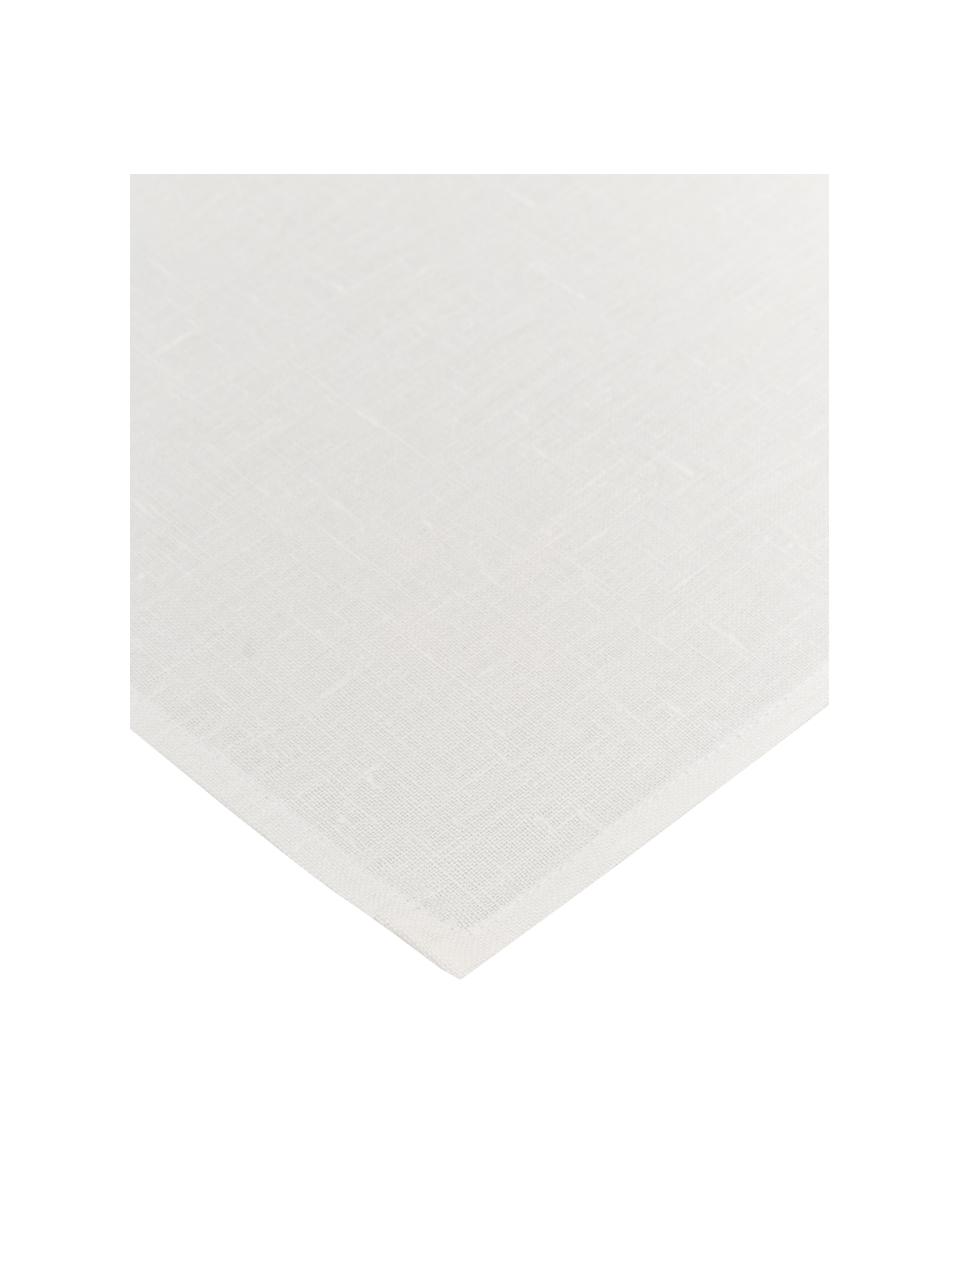 Tovagliolo in lino bianco Heddie 2 pz, 100% lino, Bianco, Larg. 45 x Lung. 45 cm